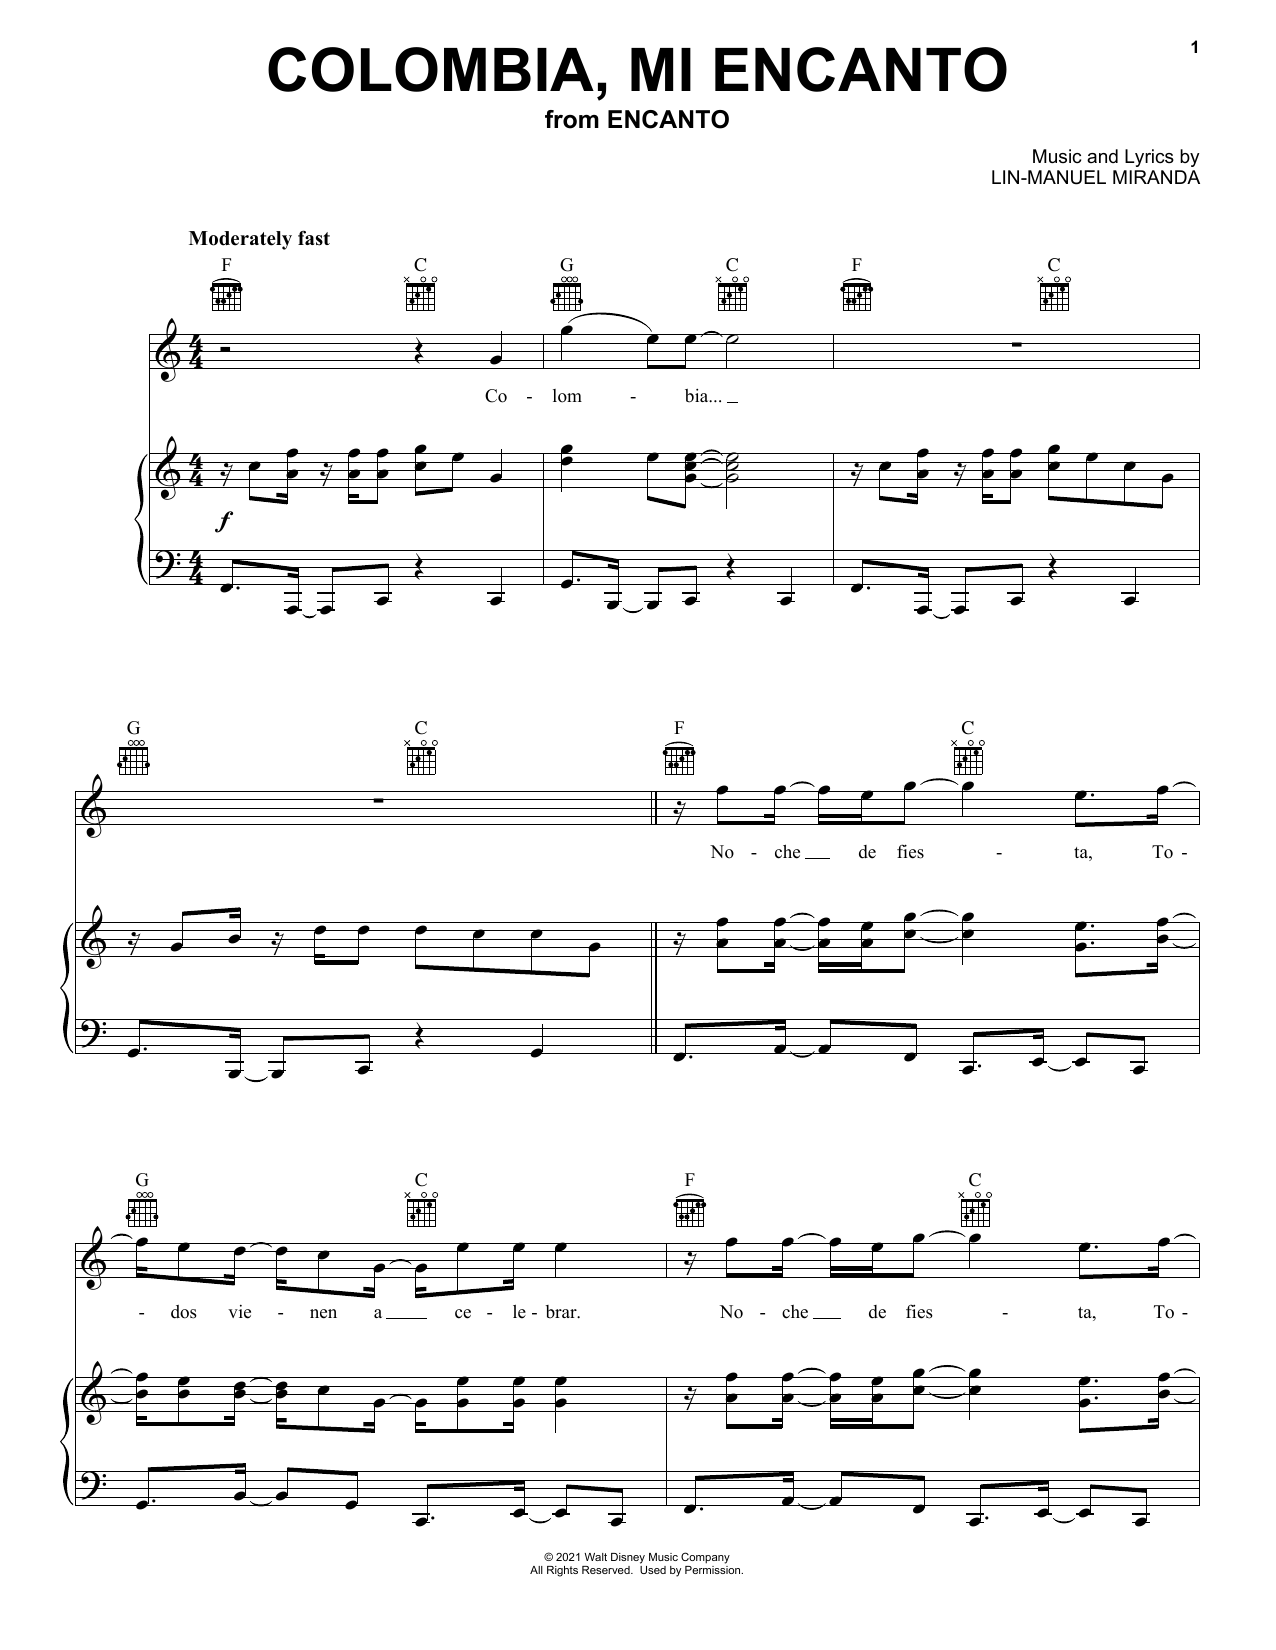 Lin-Manuel Miranda Colombia, Mi Encanto (from Encanto) Sheet Music Notes & Chords for Easy Guitar Tab - Download or Print PDF